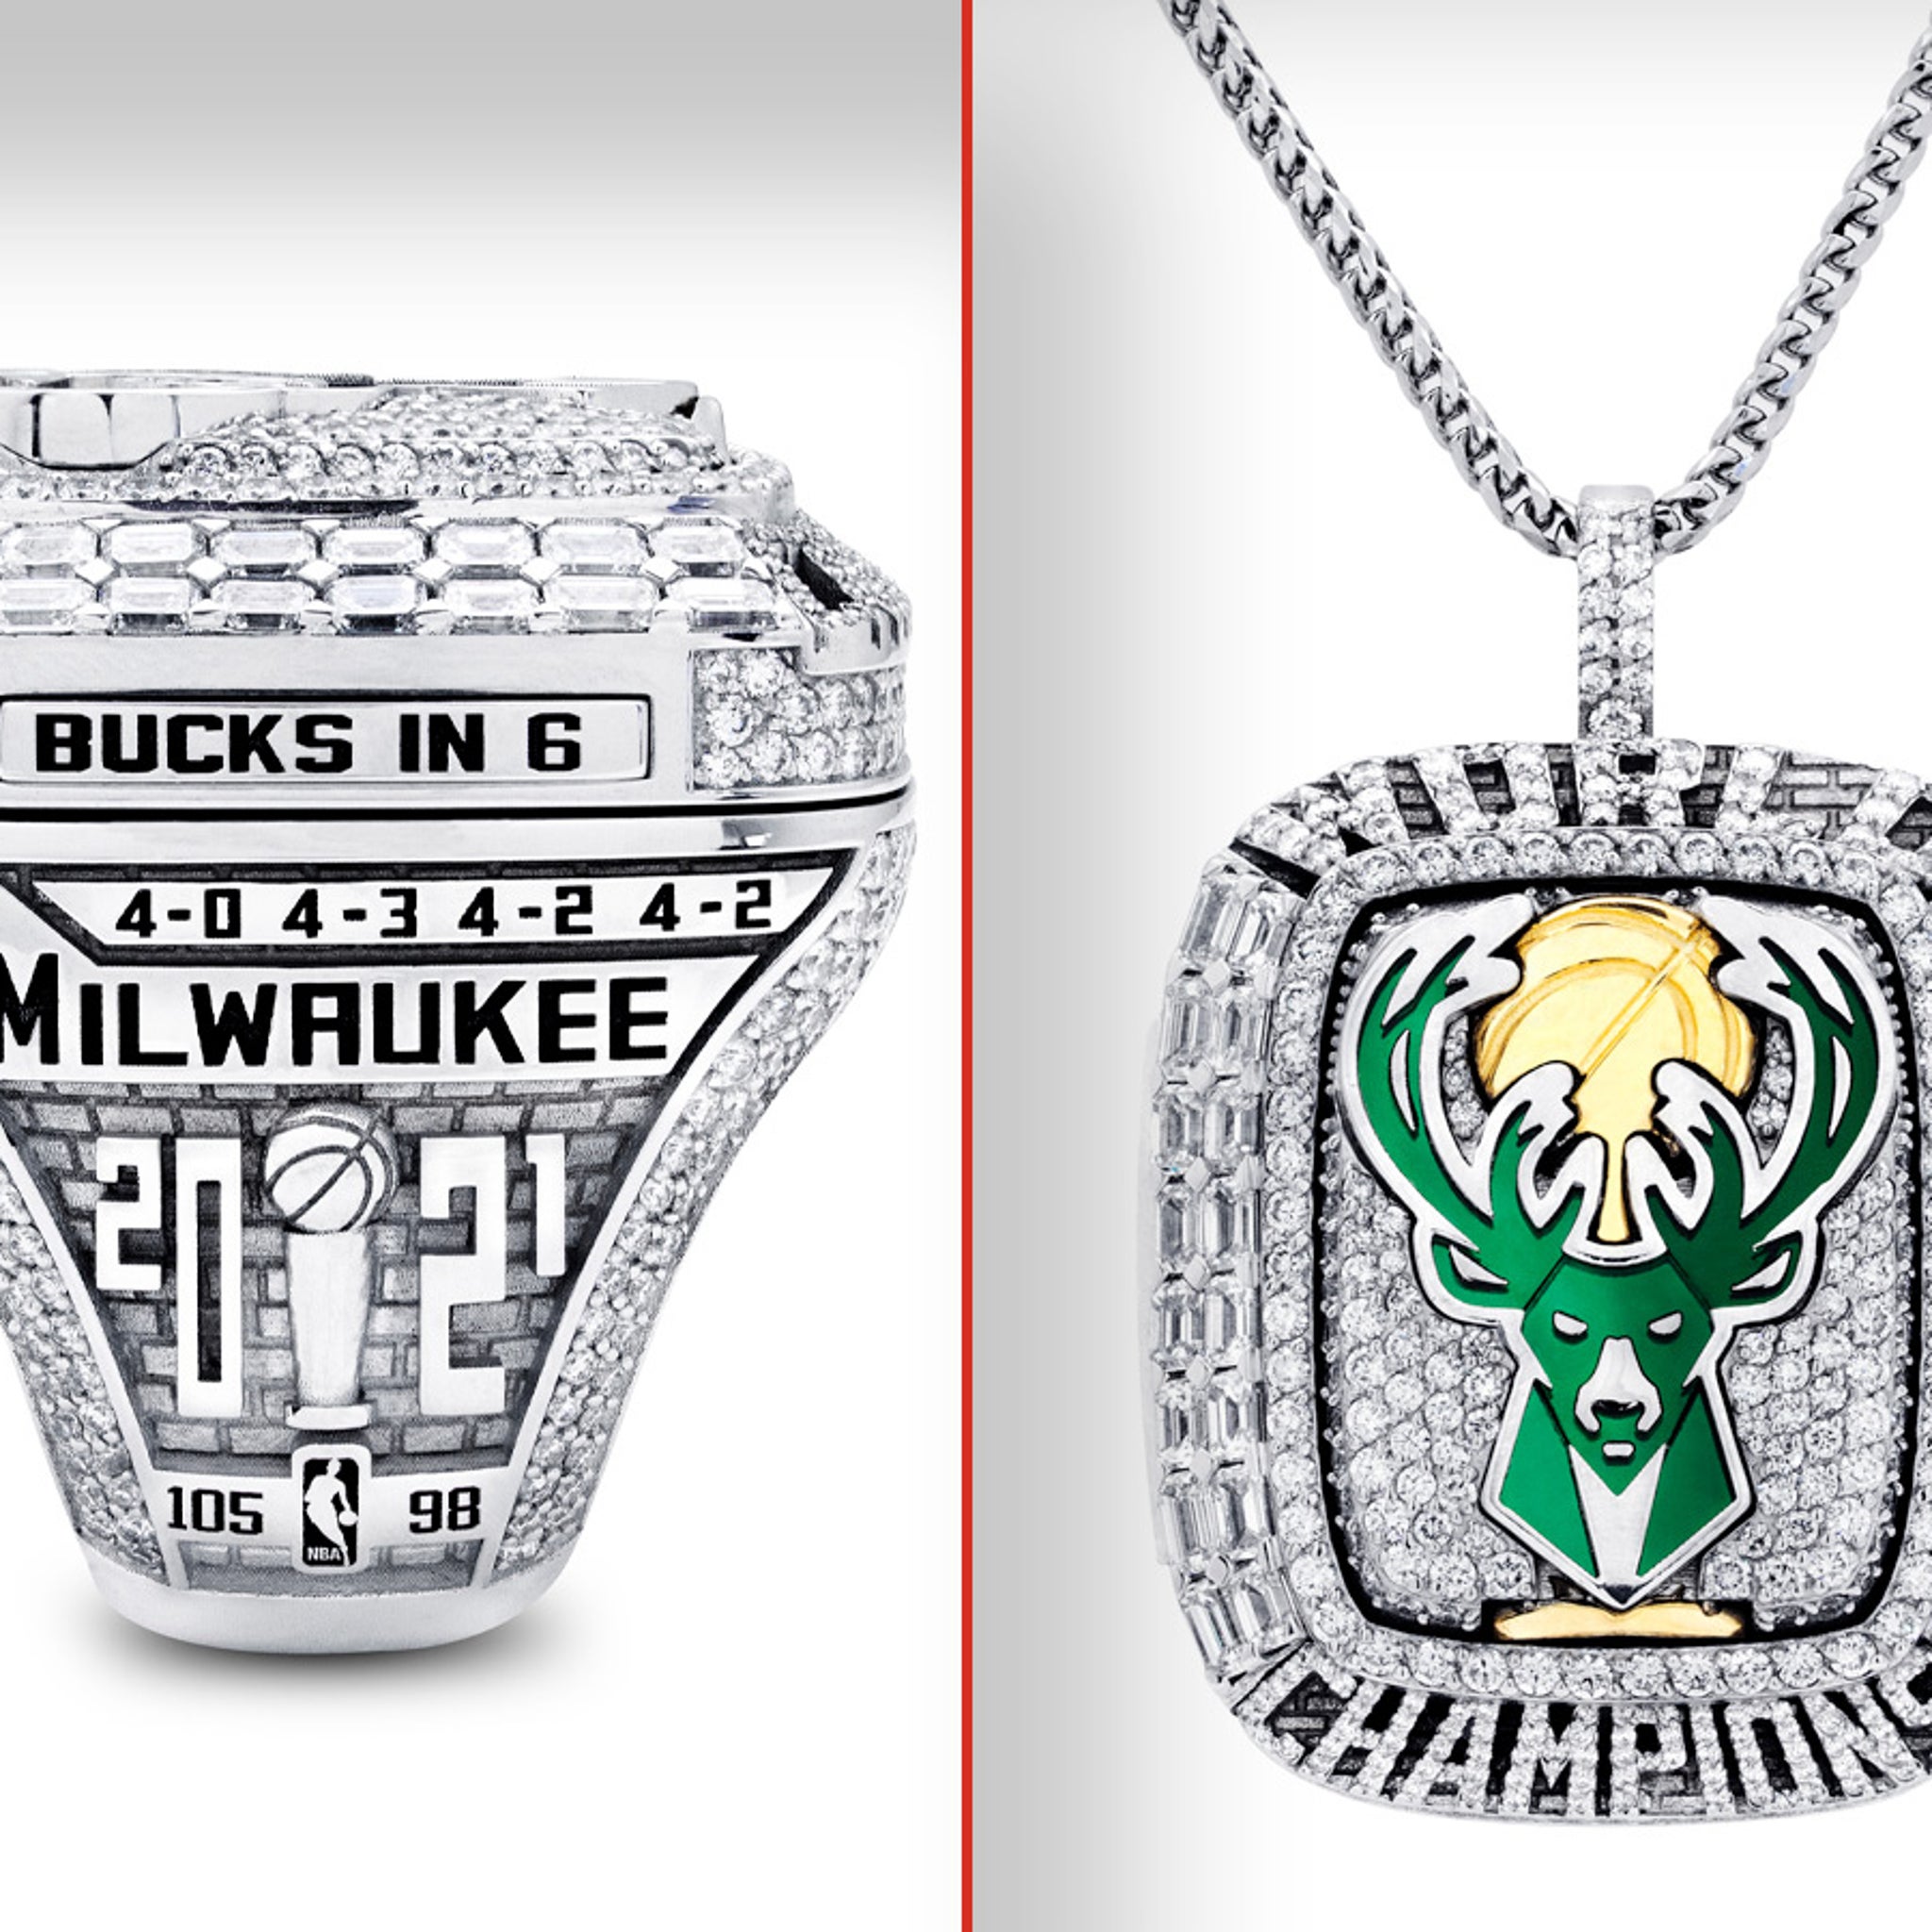 Milwaukee Bucks Reveal High-Tech Championship Rings On NBA's